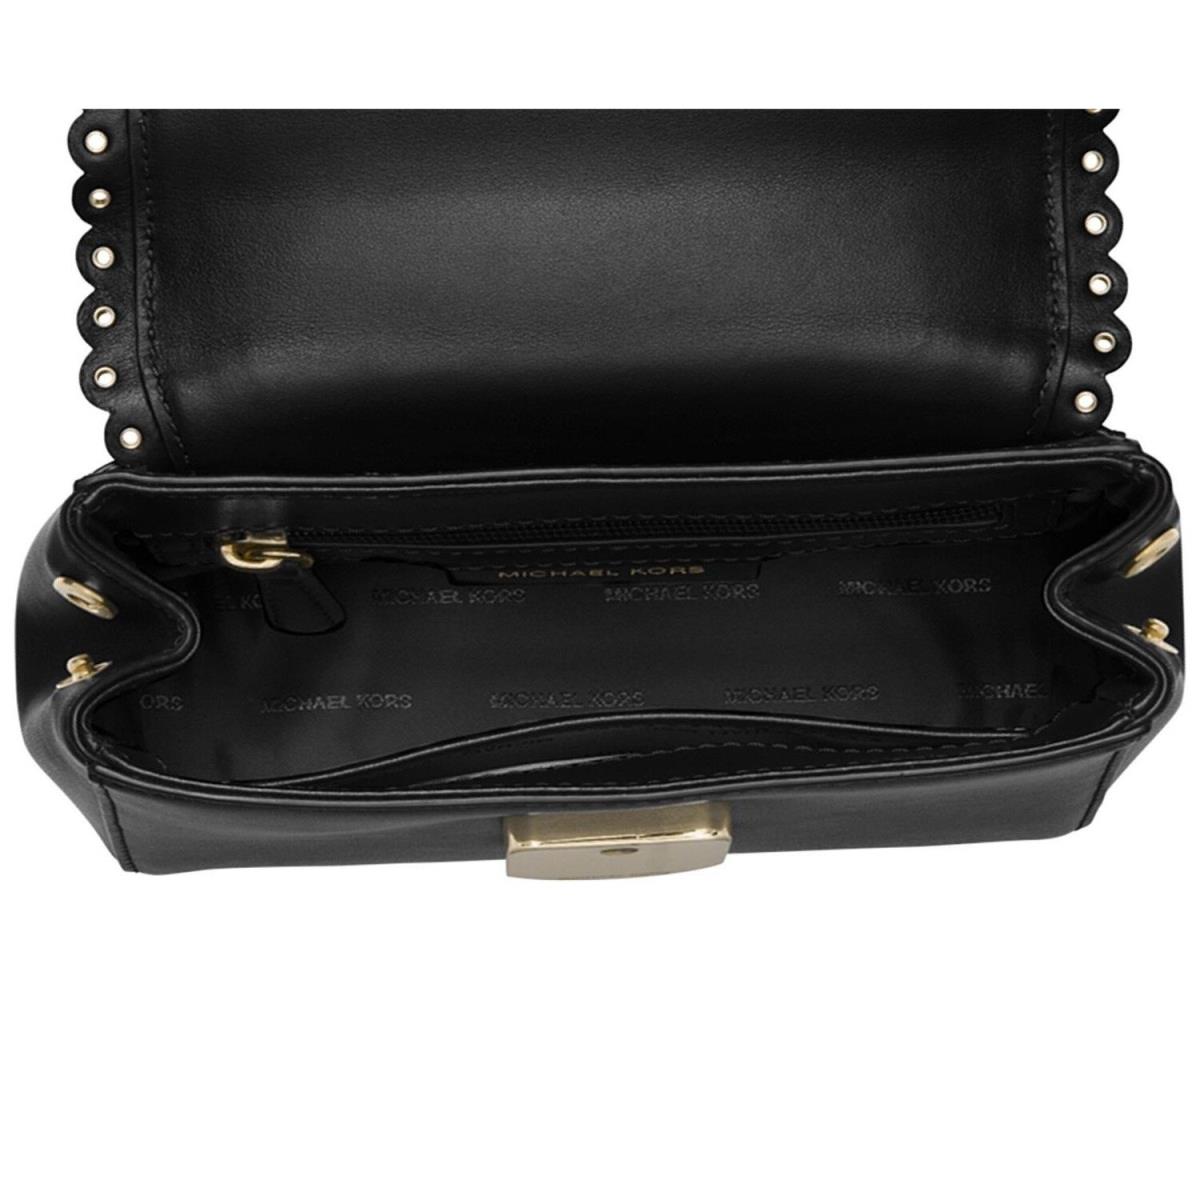 Michael Kors Ava Black Gold Leather Top Handle Crossbody Convertible Evening Bag